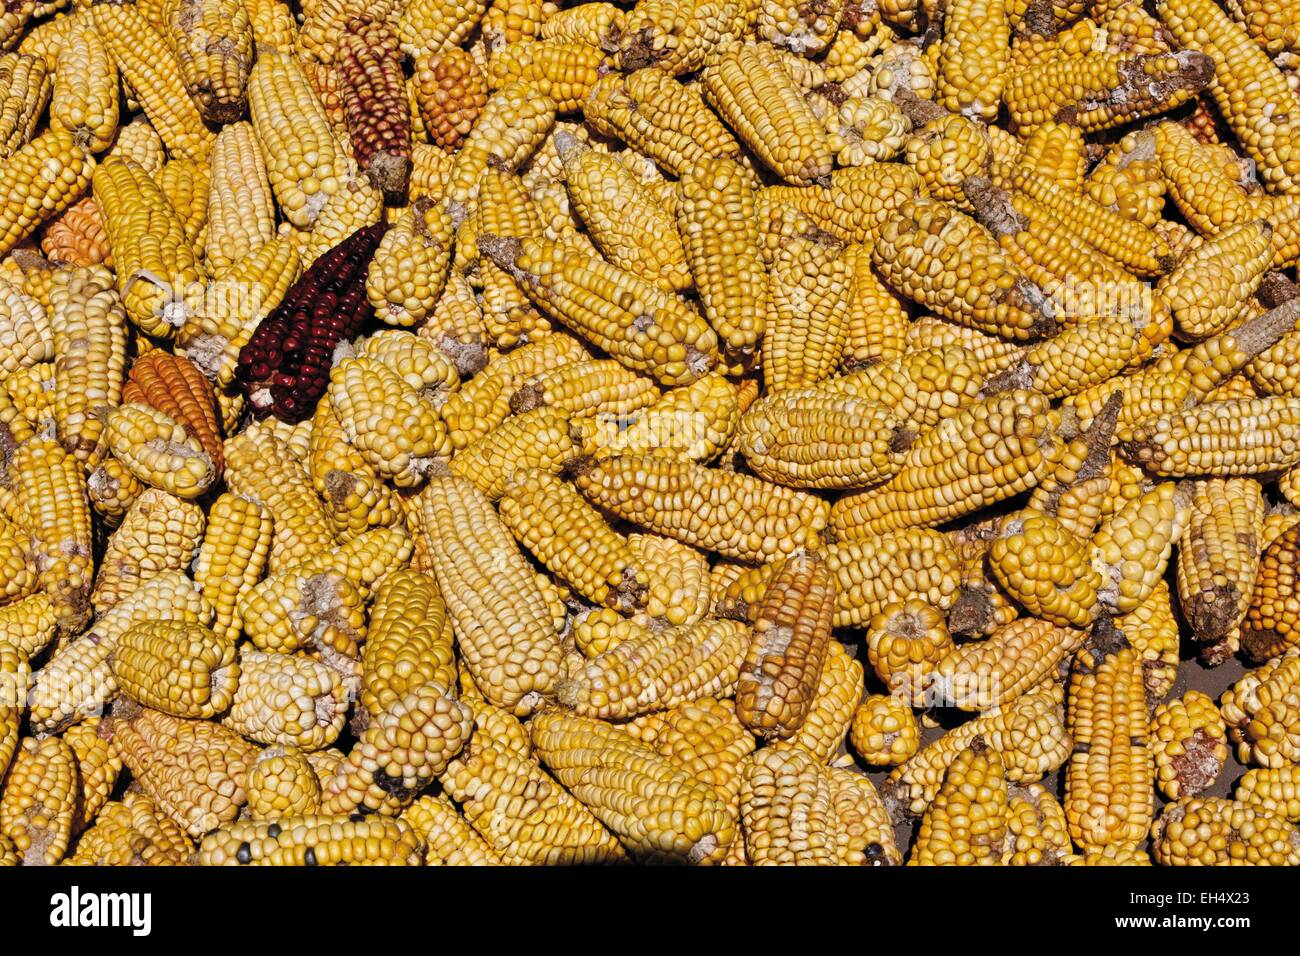 Ecuador, Imbabura, Chilcapamba, Corn cobs drying in the sun outside Stock Photo